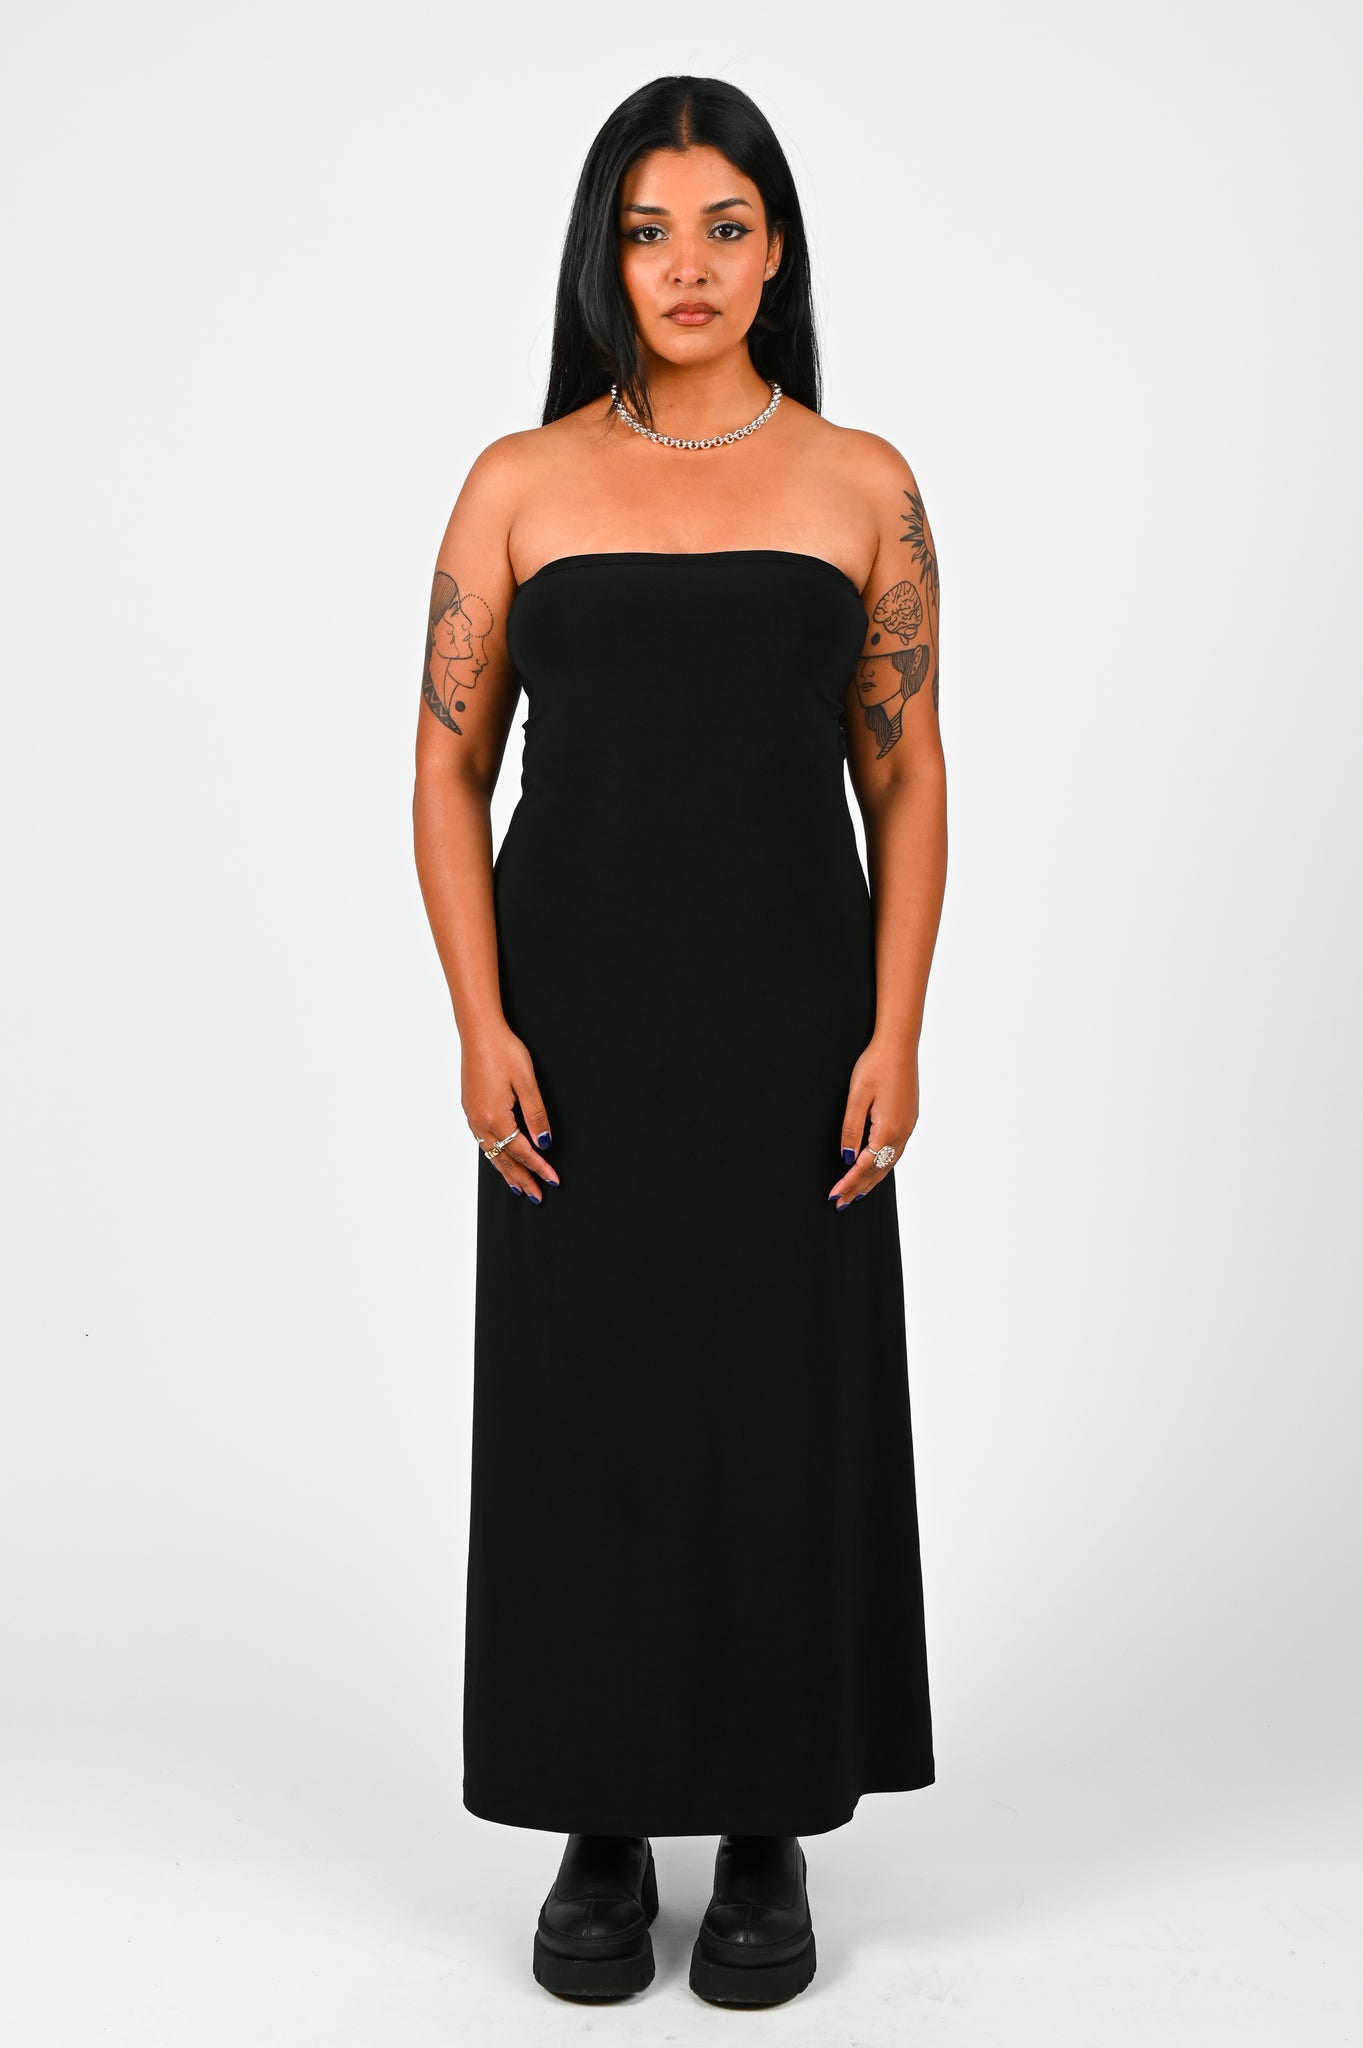 Riviera Sun Women's Strapless Tube Short Summer Dress - Casual and  Comfortable Beach Dresses (Black, Large) - Walmart.com